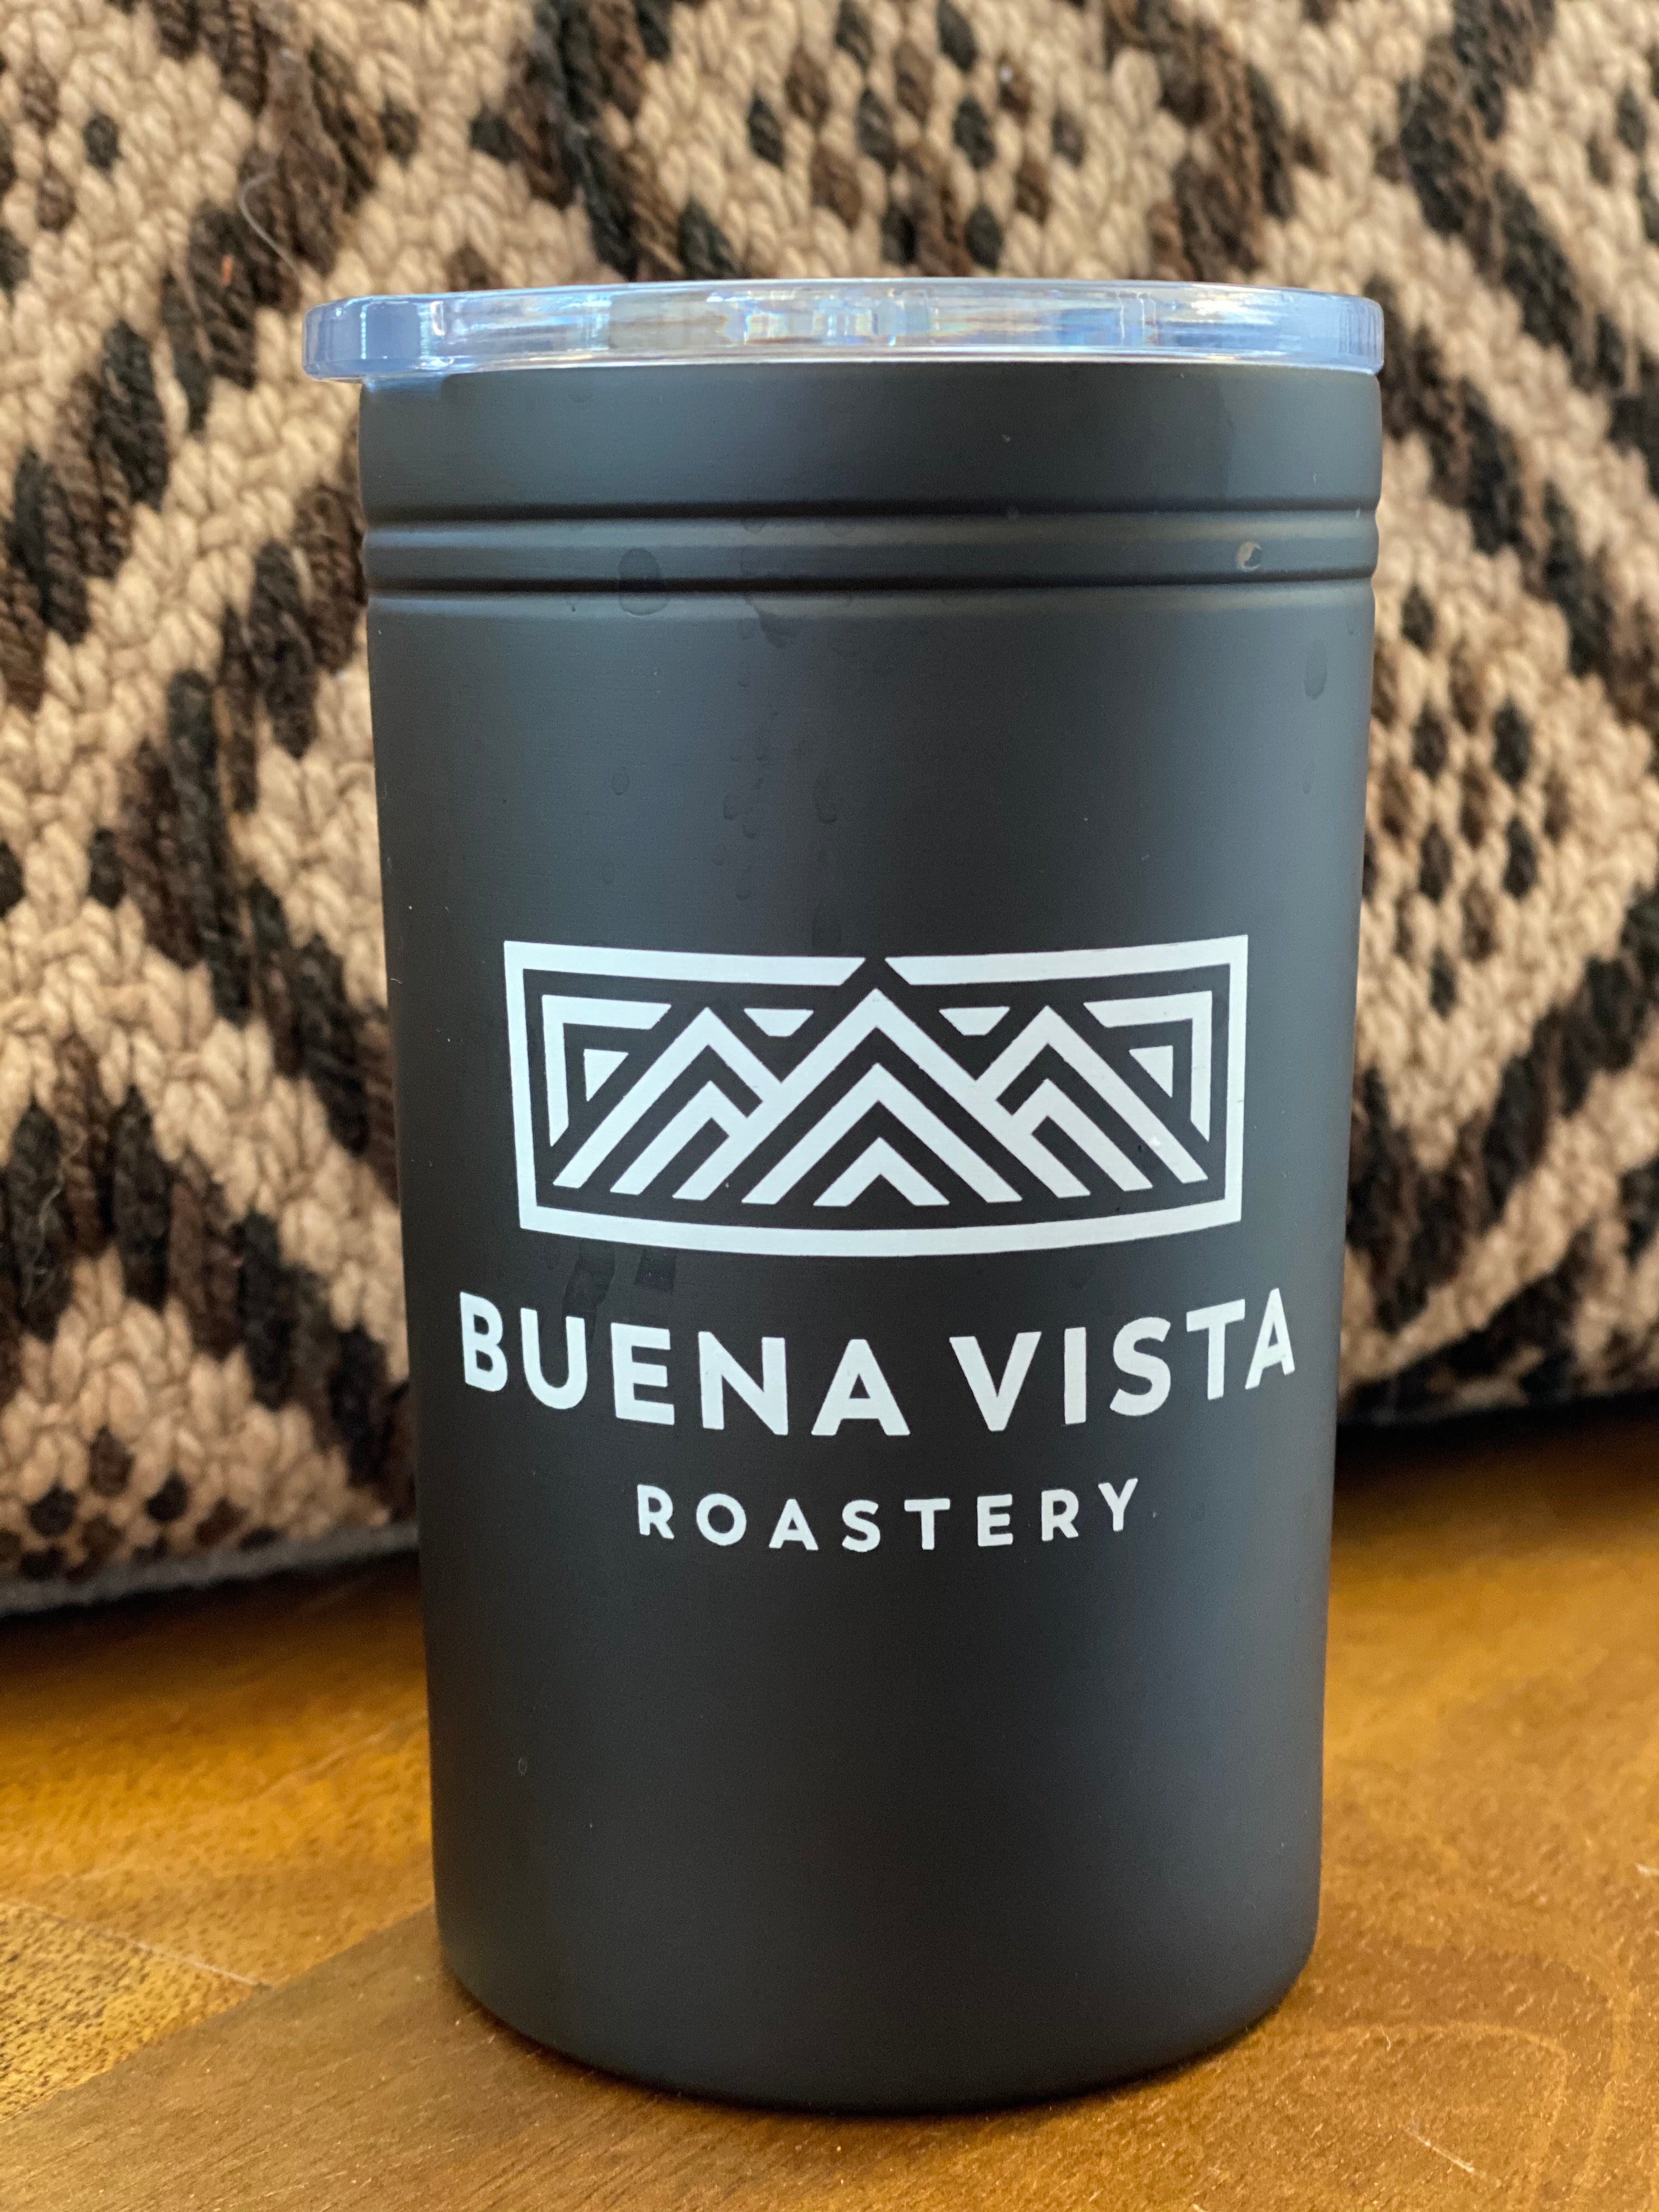 BUENA VISTA ROASTERY TRAVEL MUG - Buena Vista Roastery